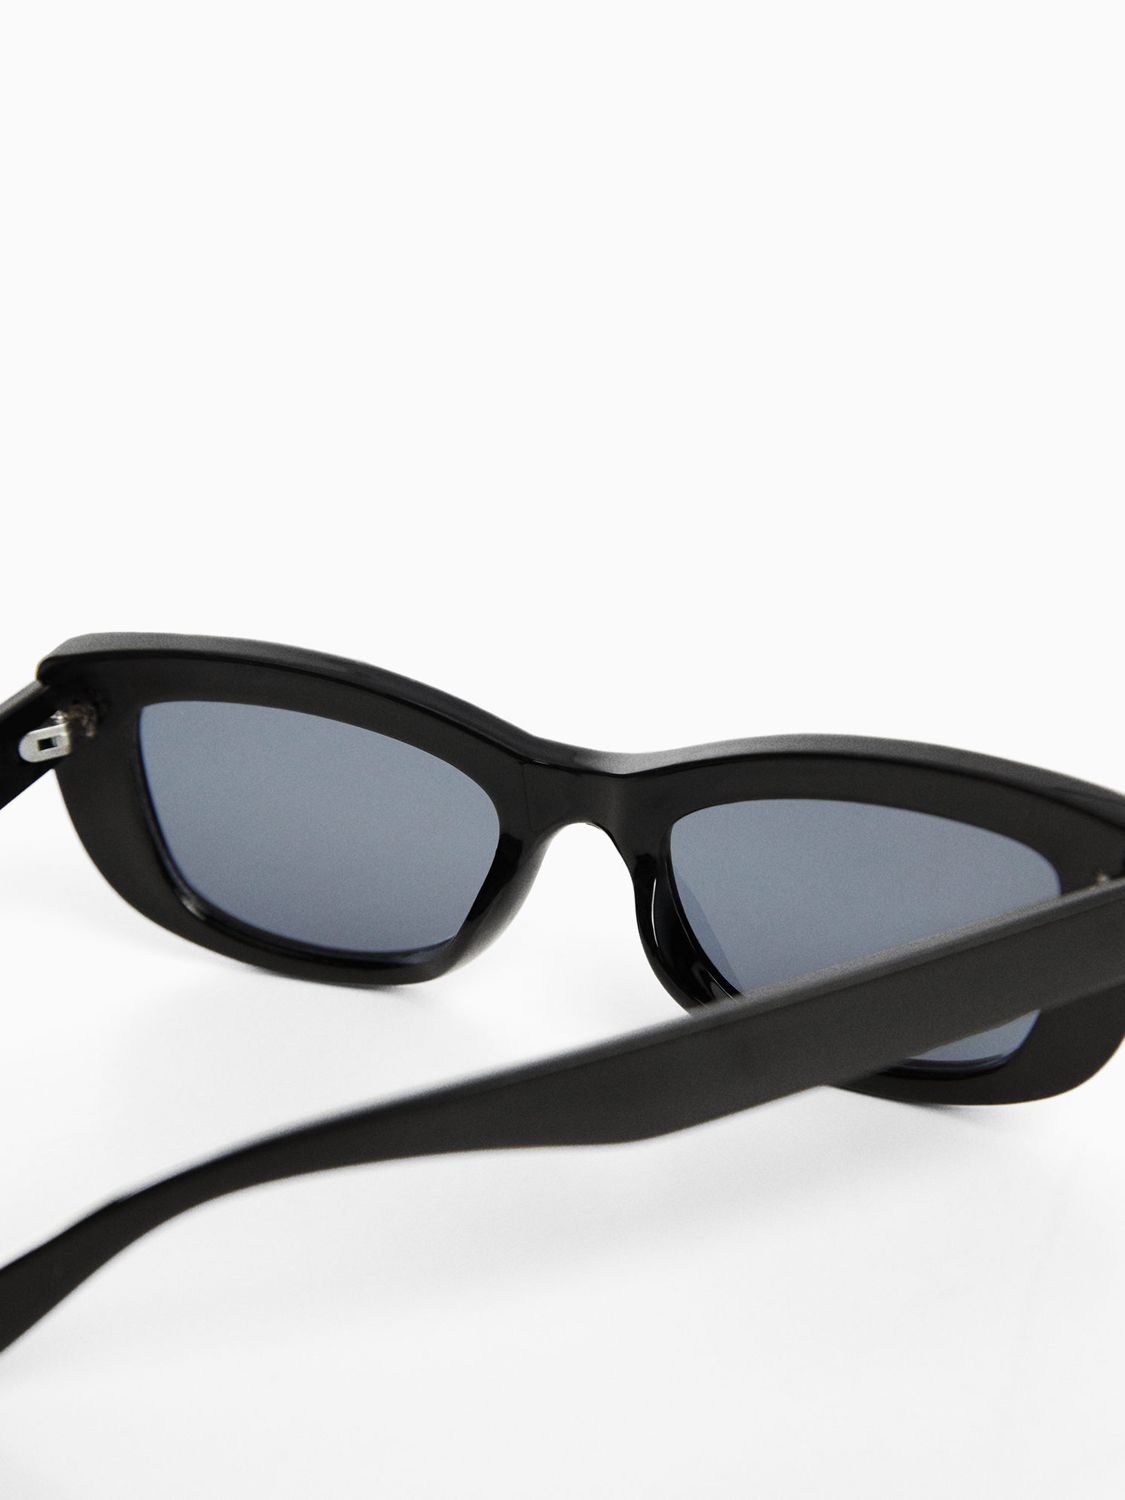 Buy Mango Women's Cathy Retro Style Sunglasses, Black Online at johnlewis.com